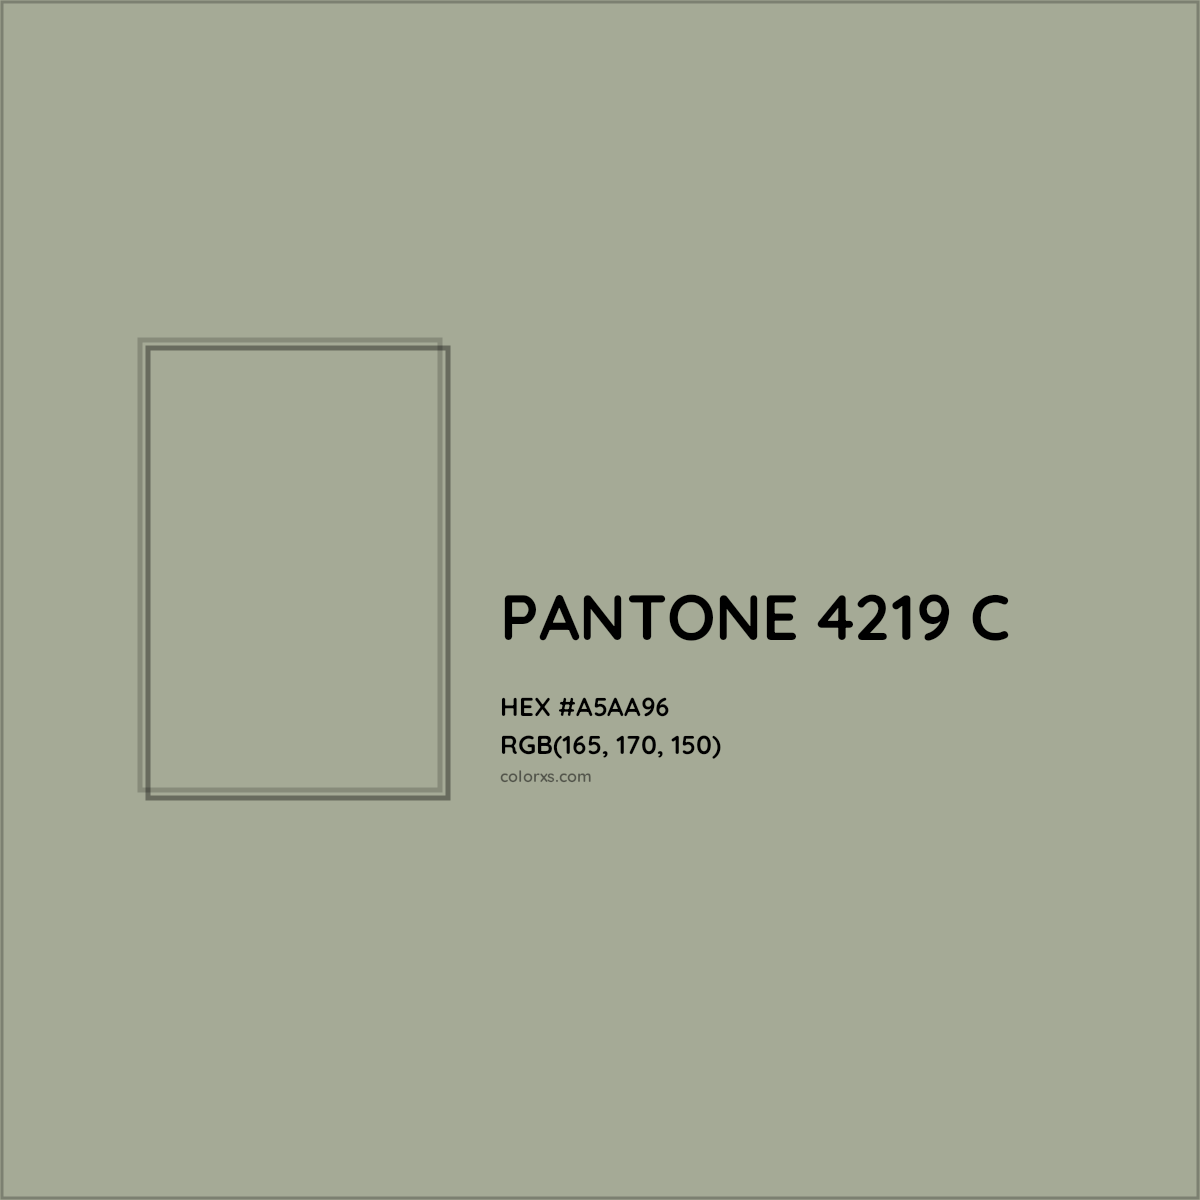 HEX #A5AA96 PANTONE 4219 C CMS Pantone PMS - Color Code